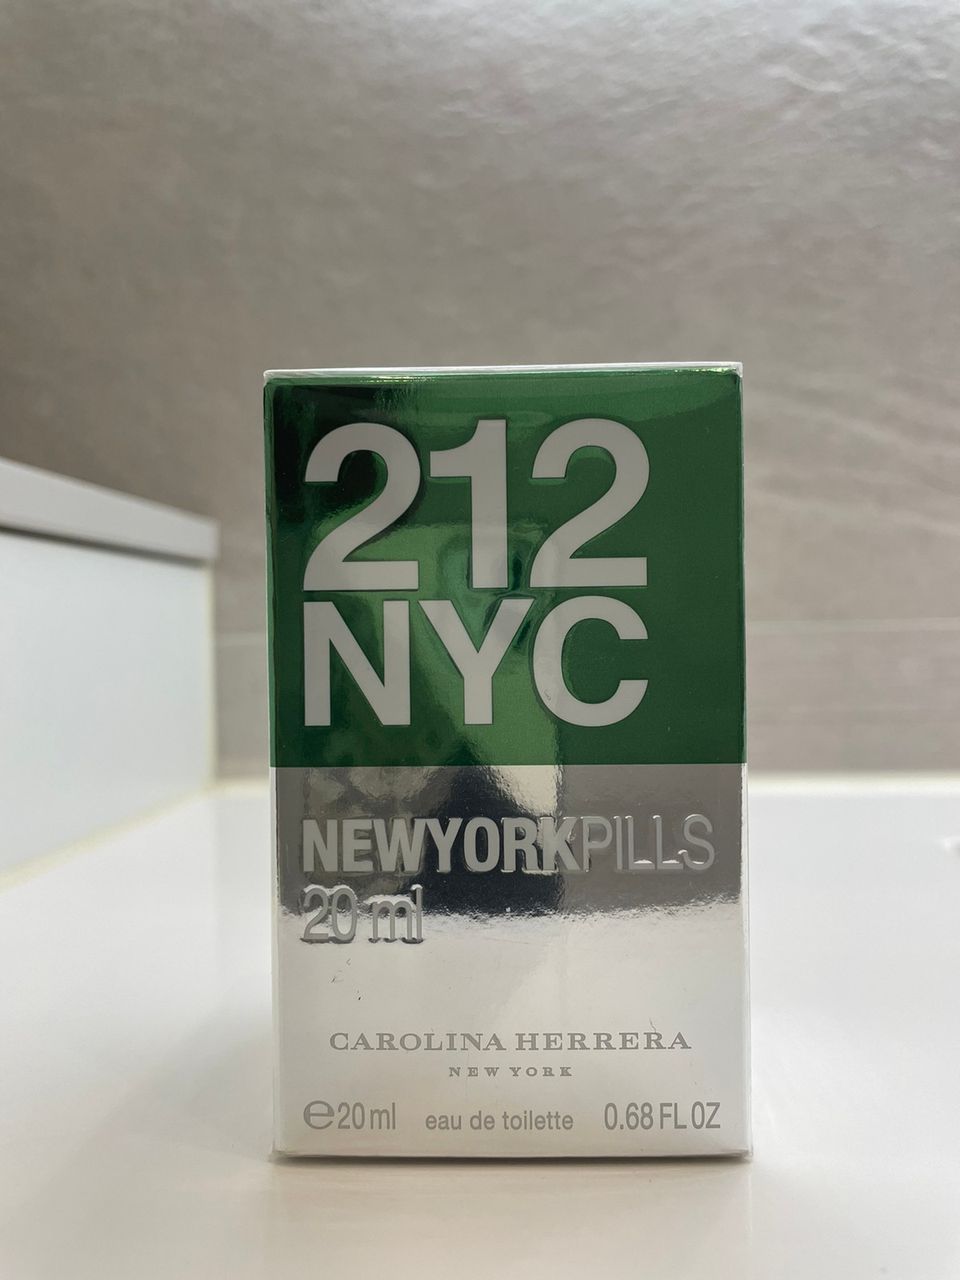 Carolina Herrera 212 NYC hajuvesi, 20ml